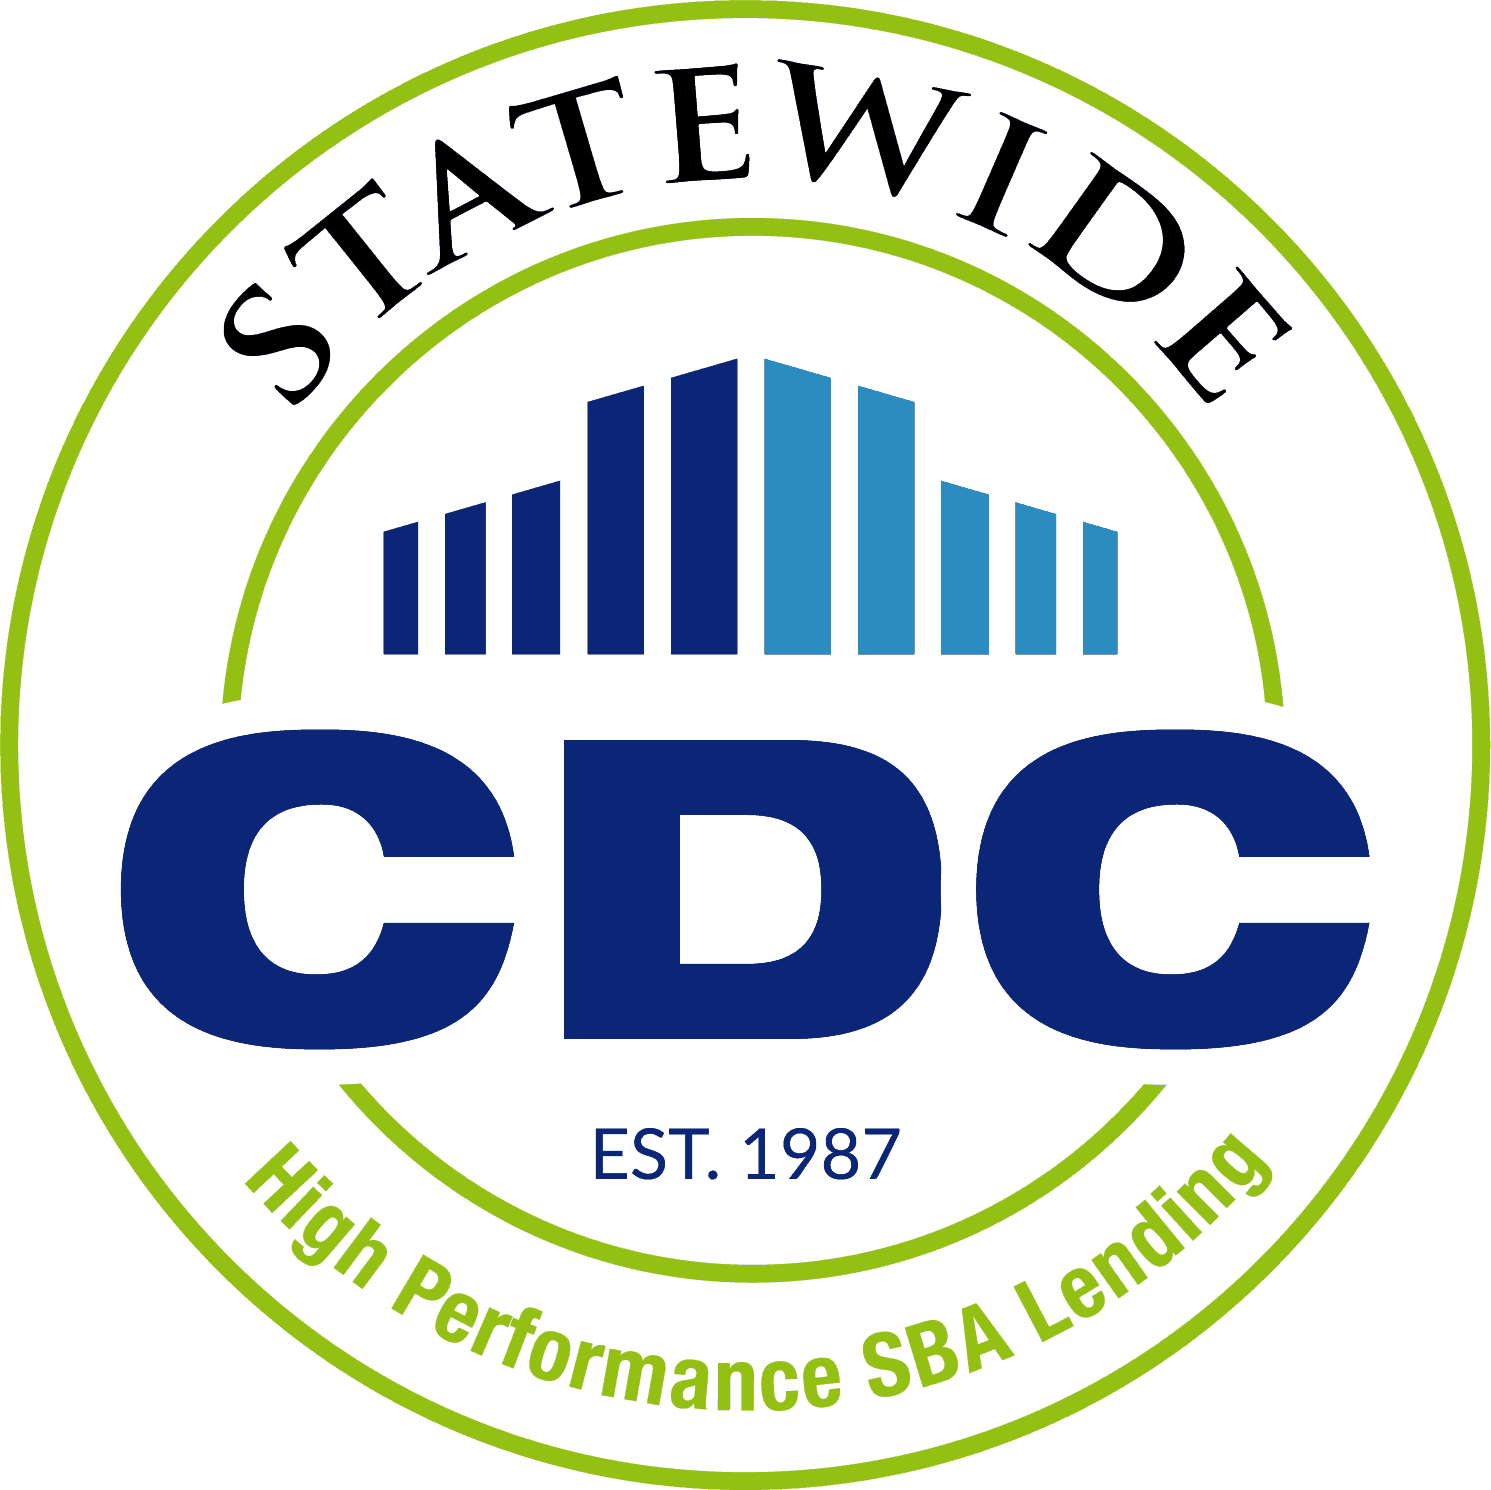 StatewideCDC Est 1987 HighPerformance